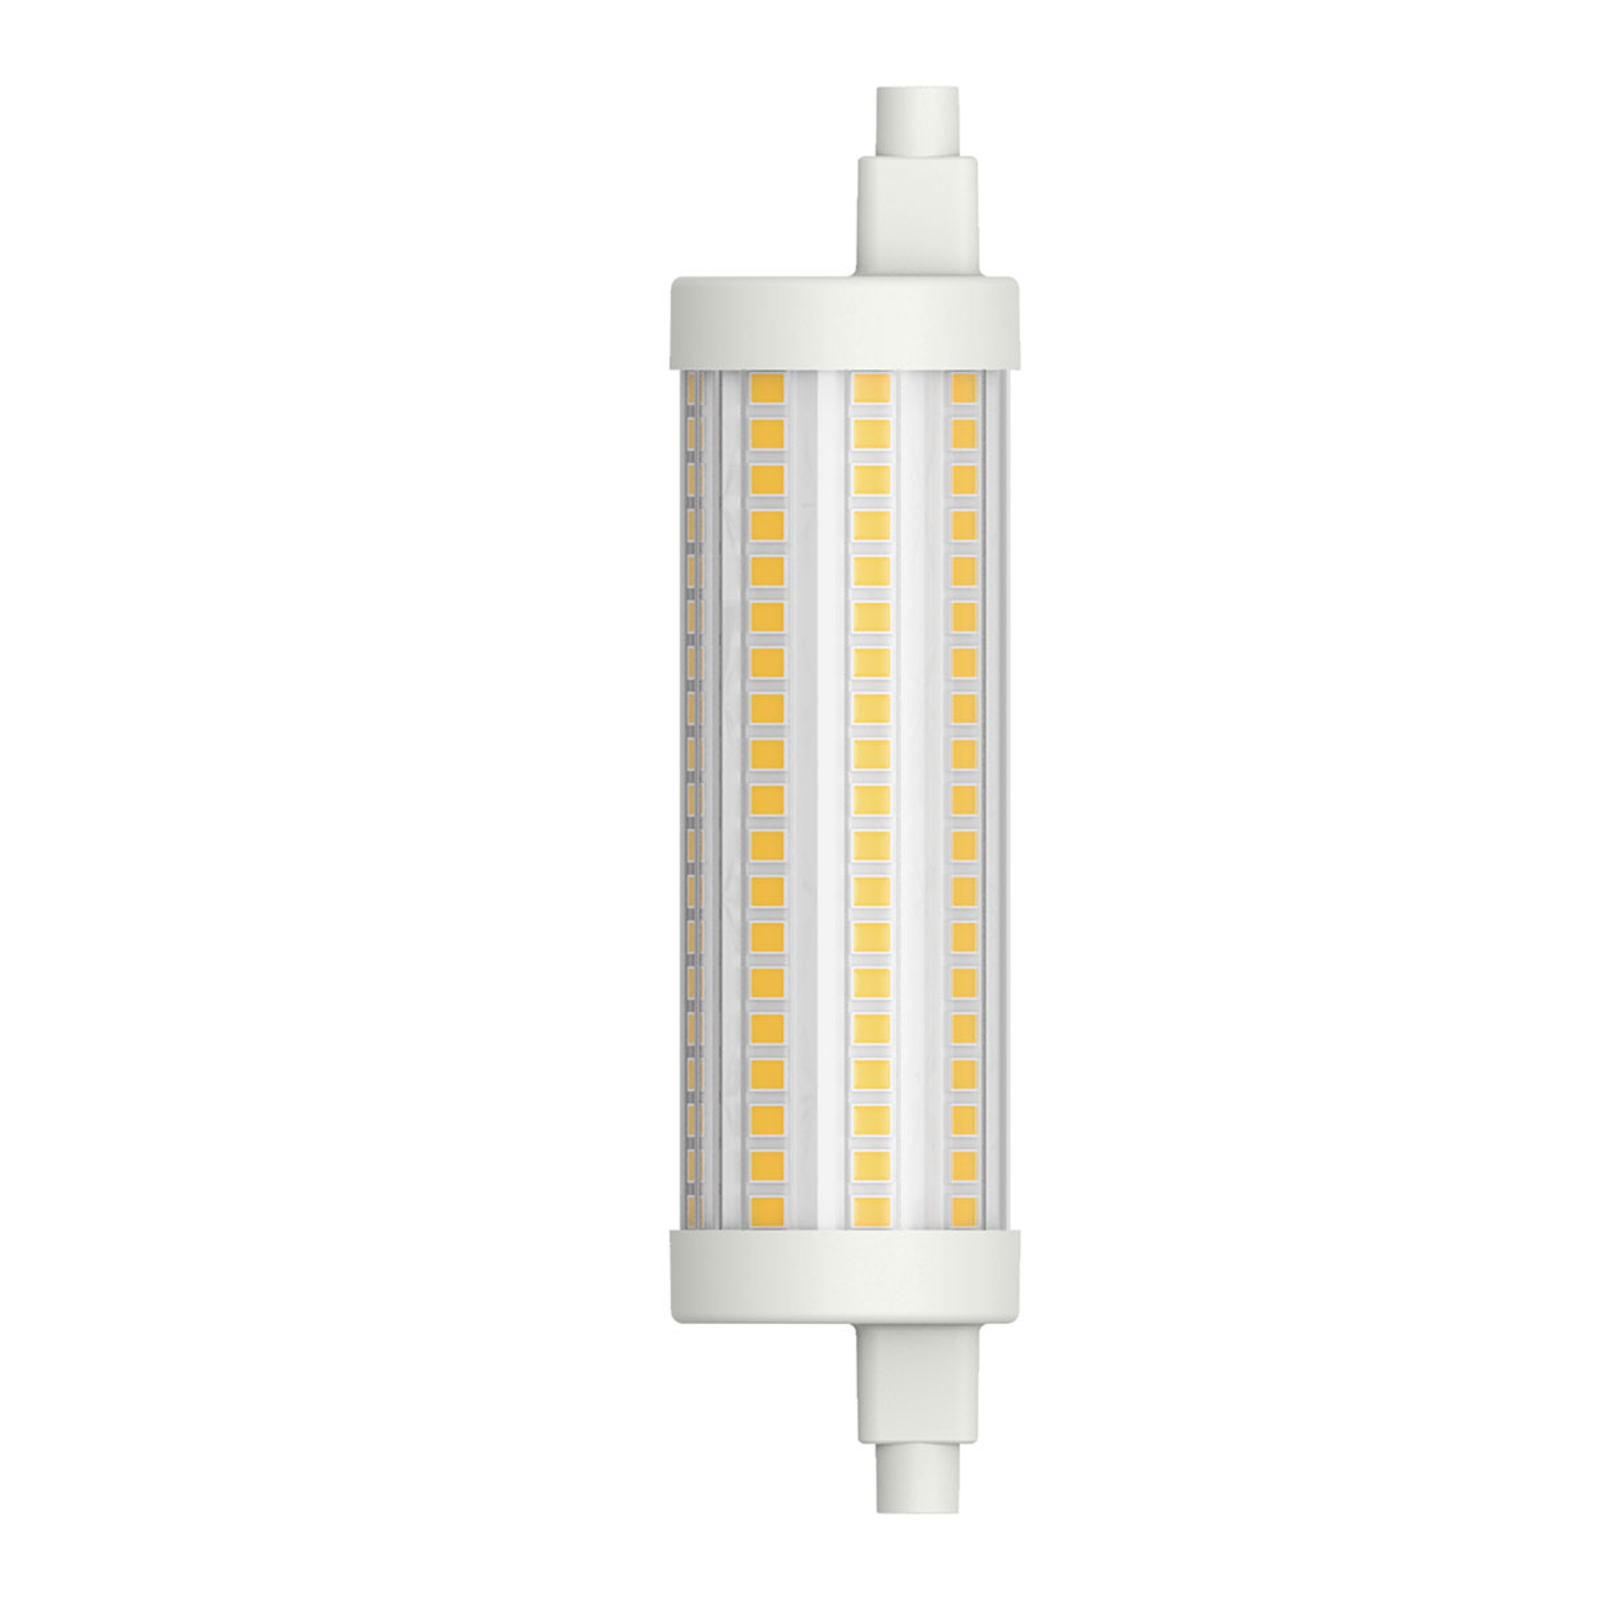 oppervlakkig sector Praten LED staaflamp R7s 117,6 mm 12W warmwit dimbaar | Lampen24.be